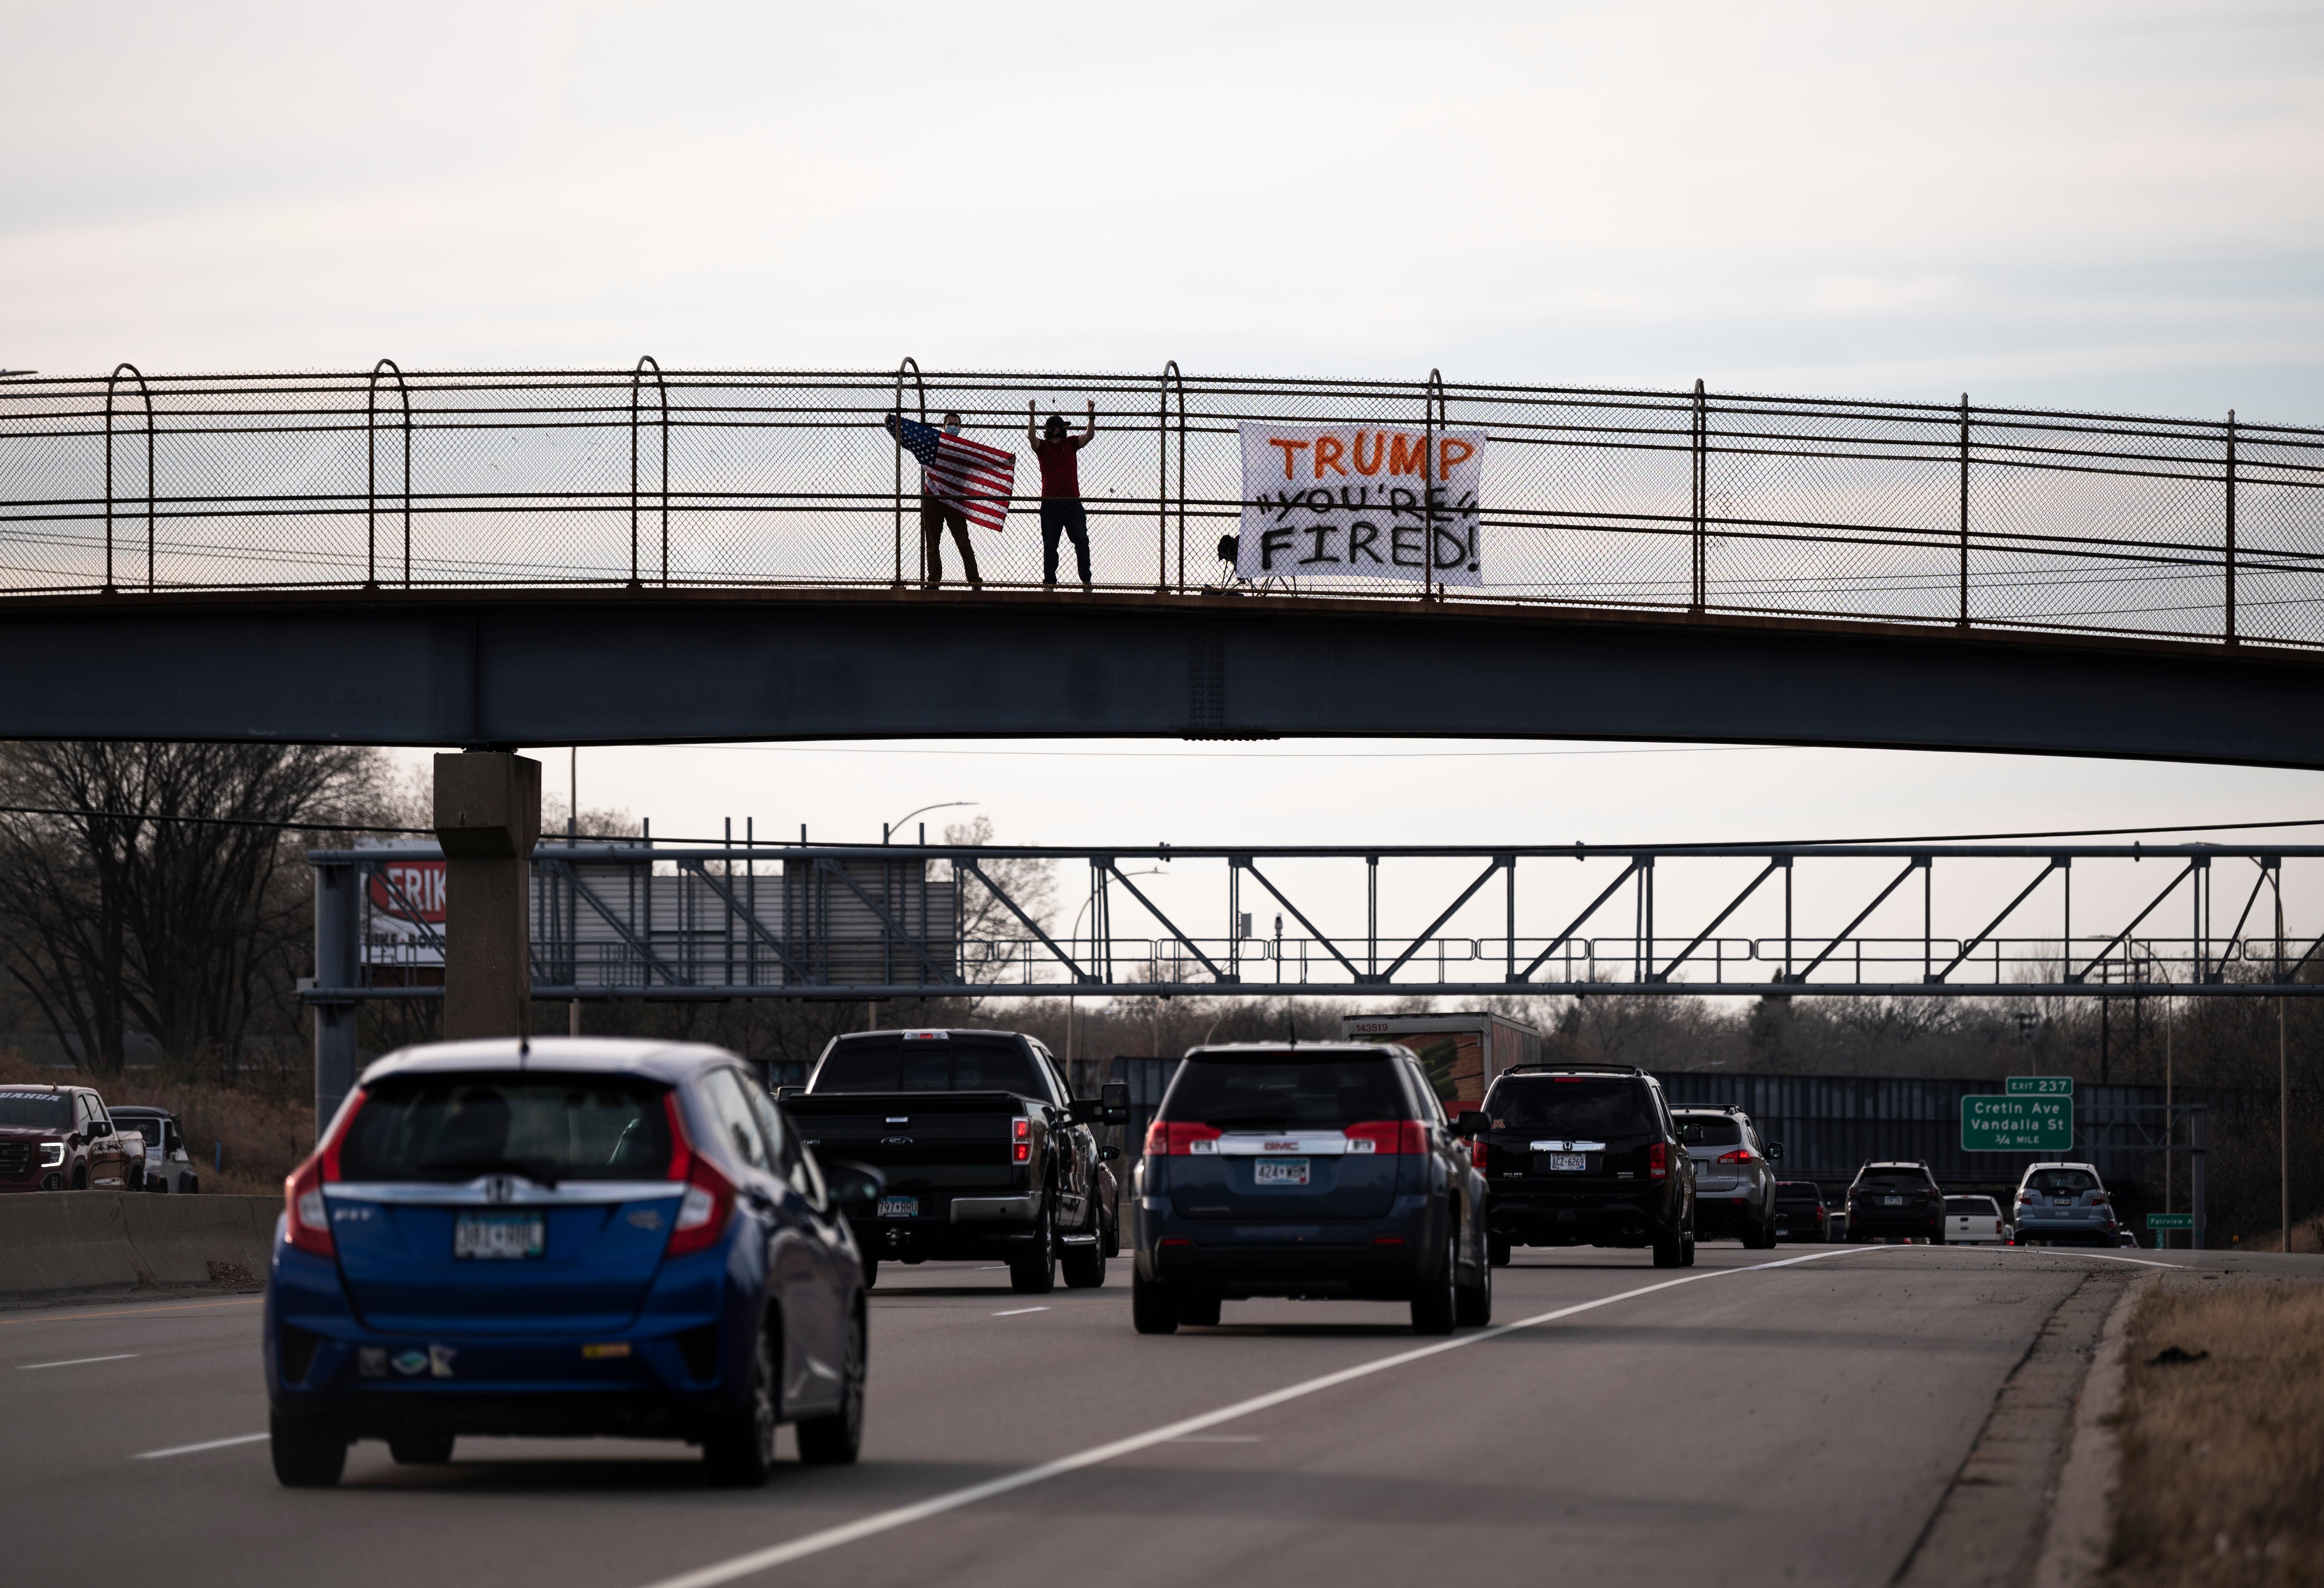 A man waves an American flag on a pedestrian bridge above highway I-94 on November 7, 2020 in St. Paul, Minnesota.